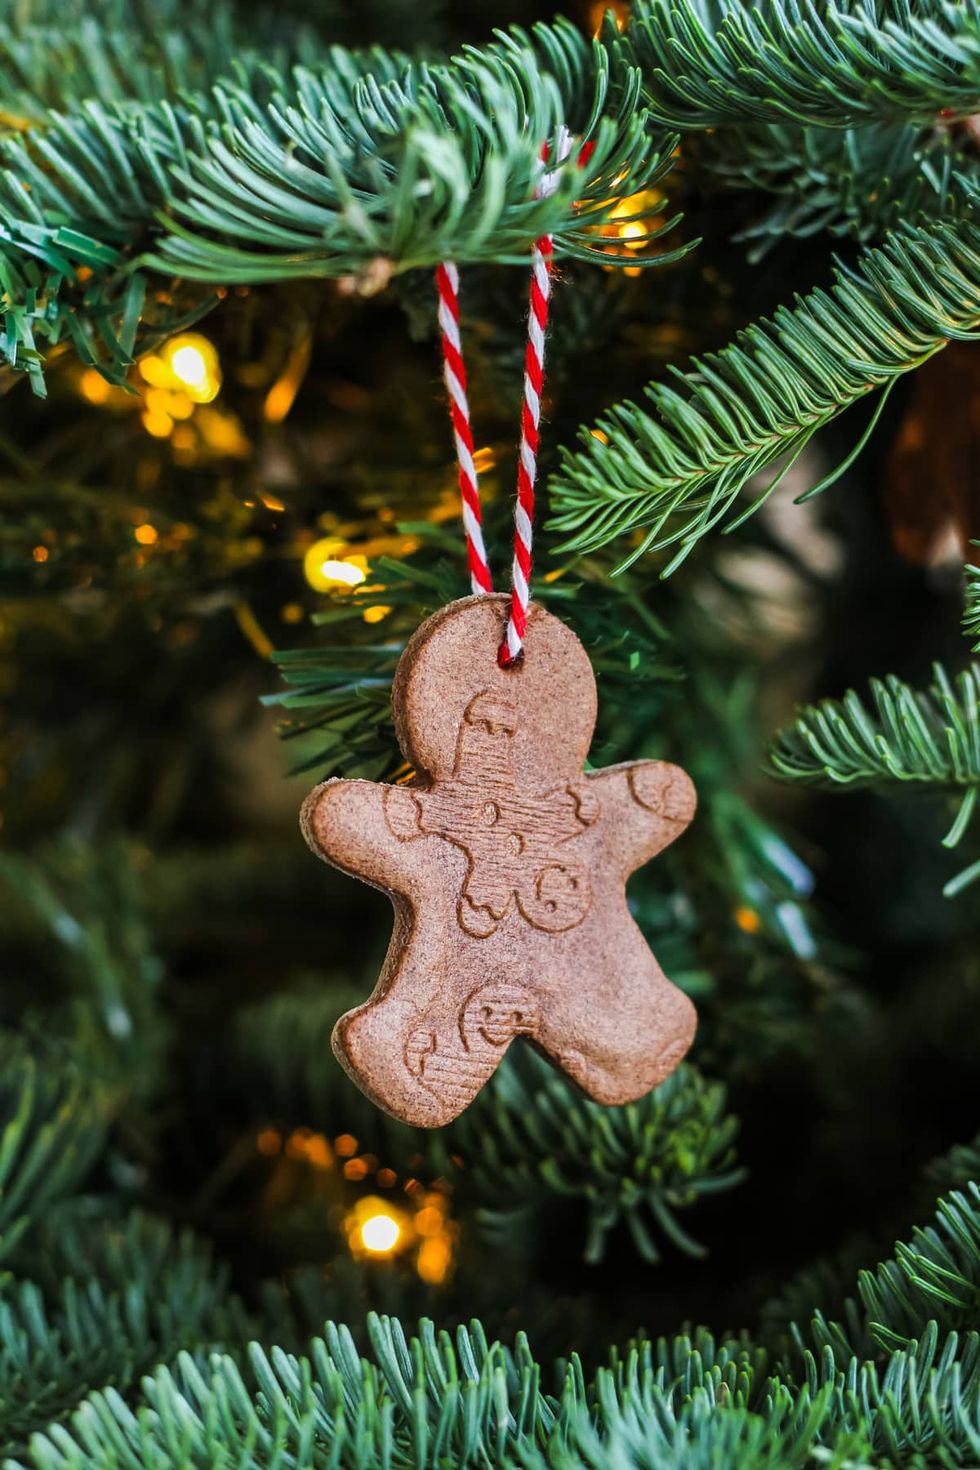 Decorating Homemade Clay & Salt Dough Christmas Ornaments - A